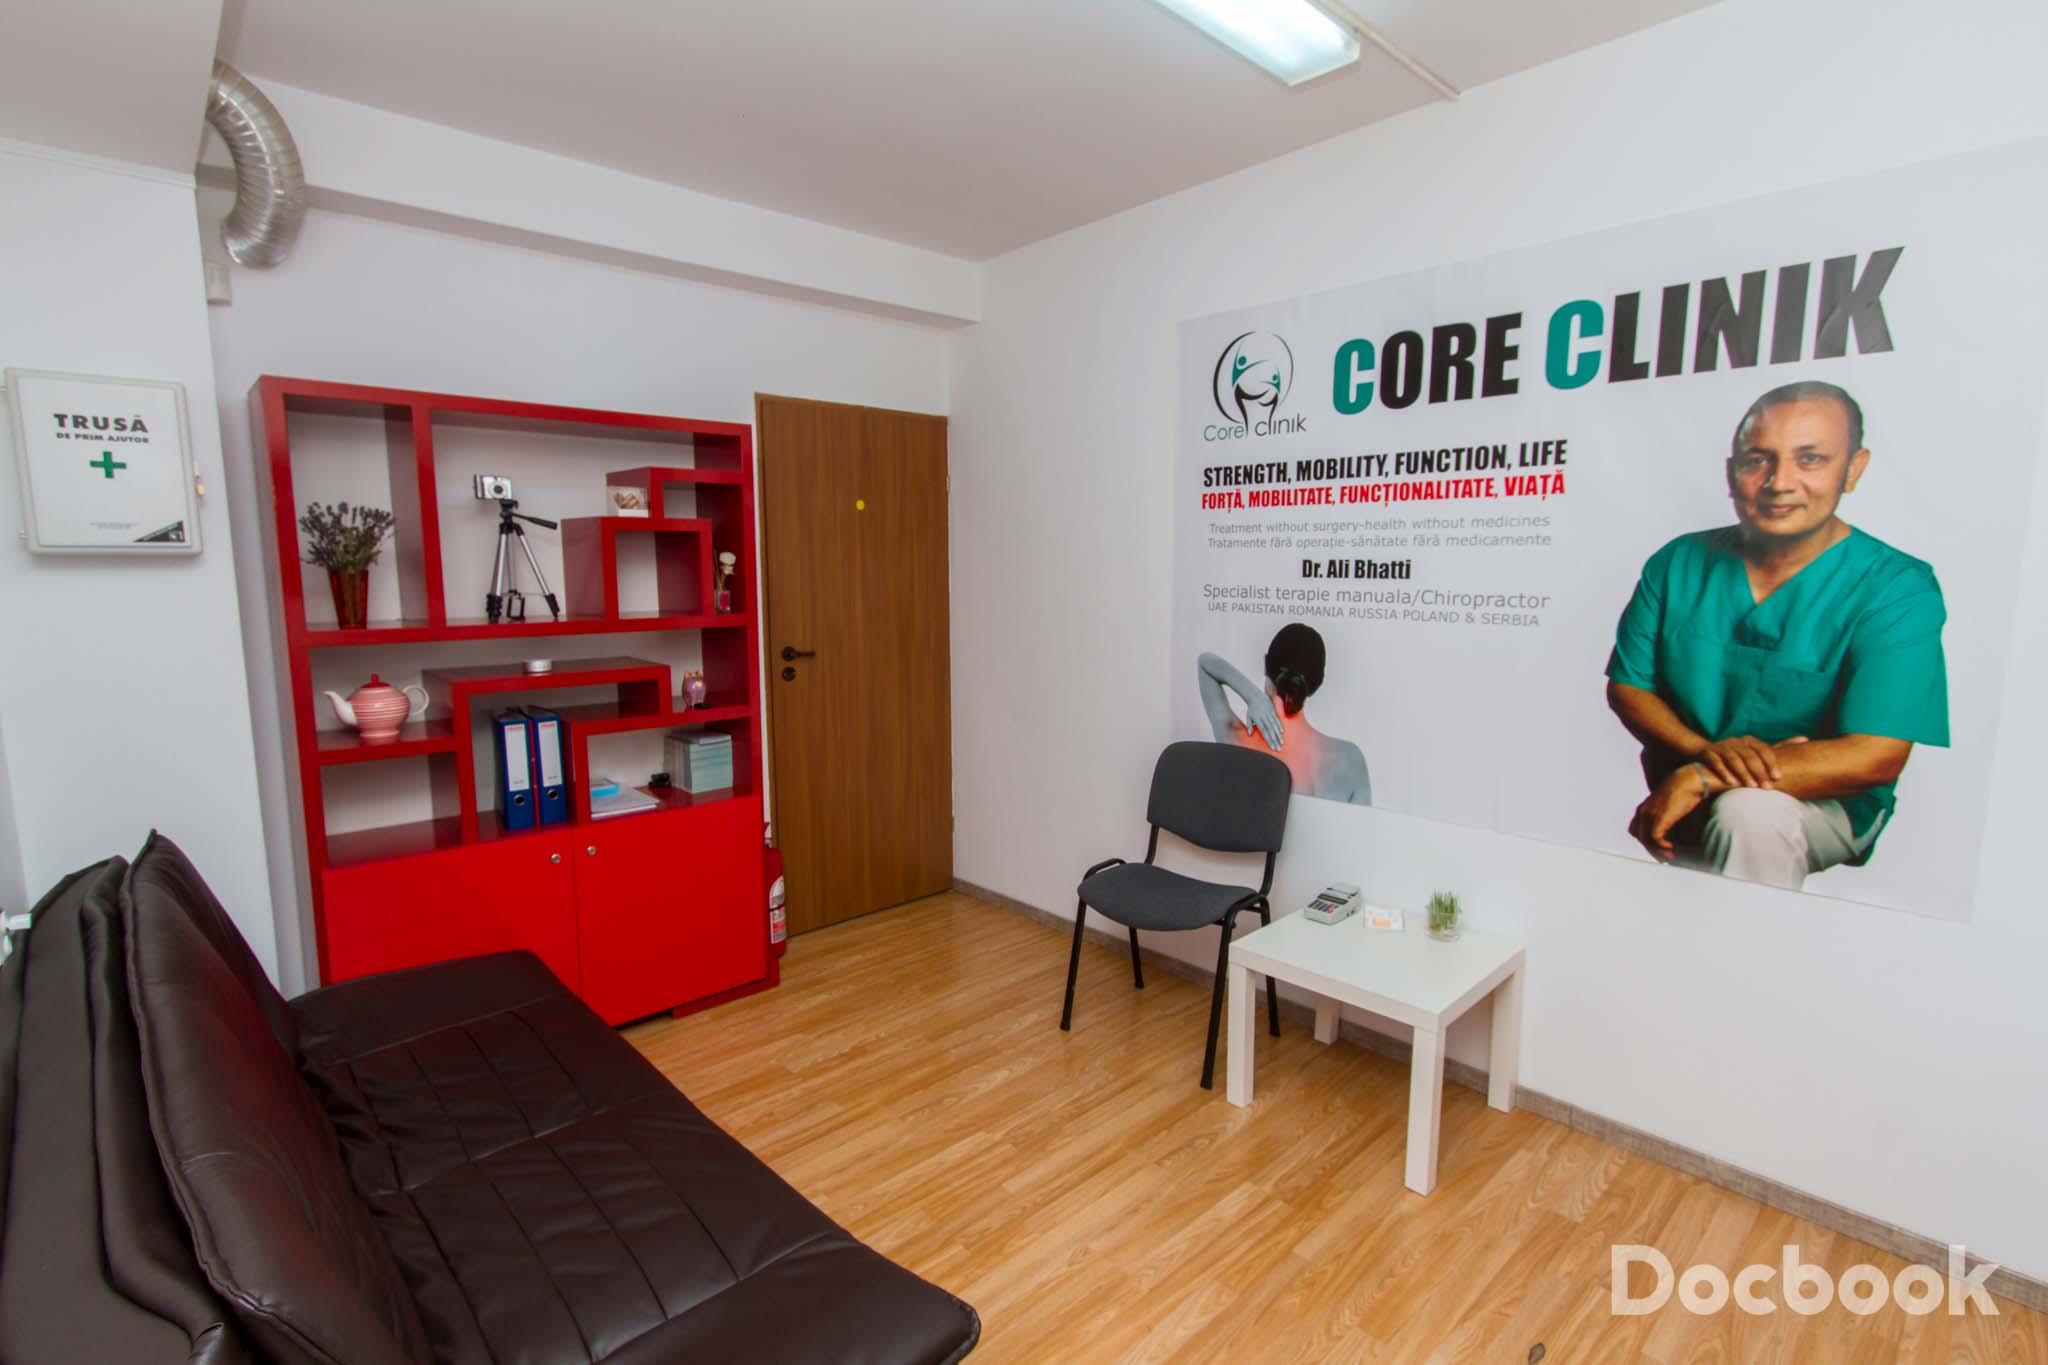 Clinica Core Clinik